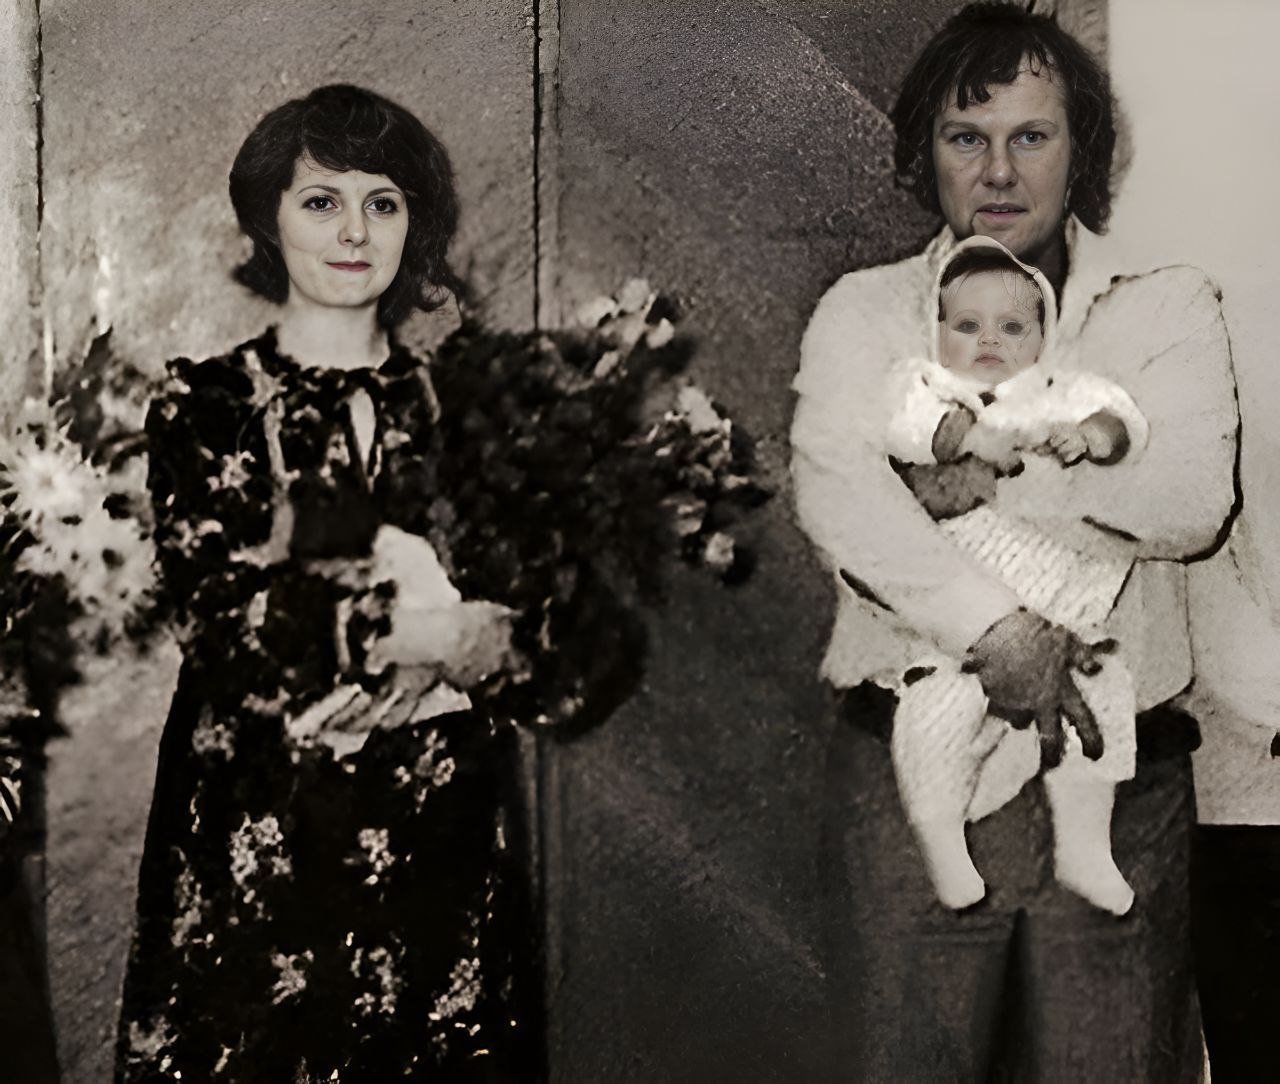 Клара новикова с семьей фото